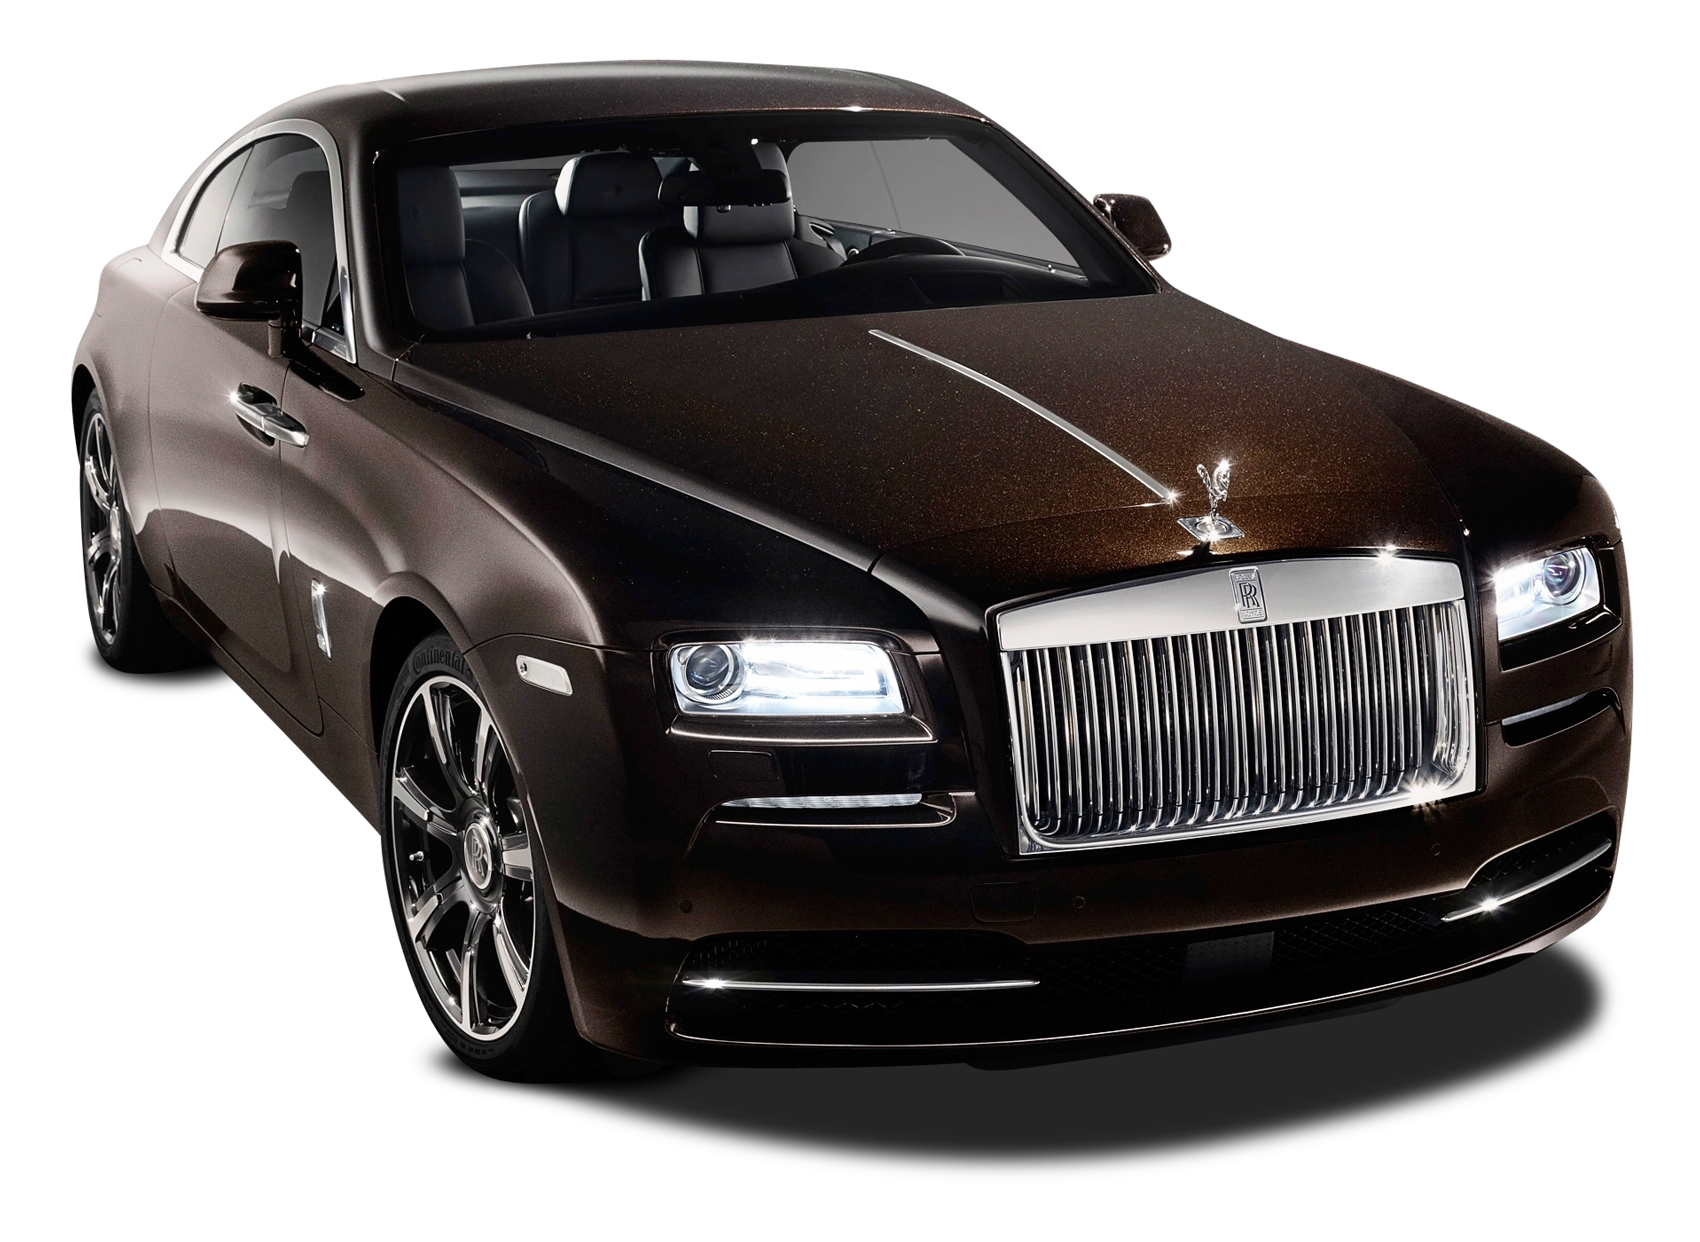 Black Rolls Royce Wraith Car PNG Image